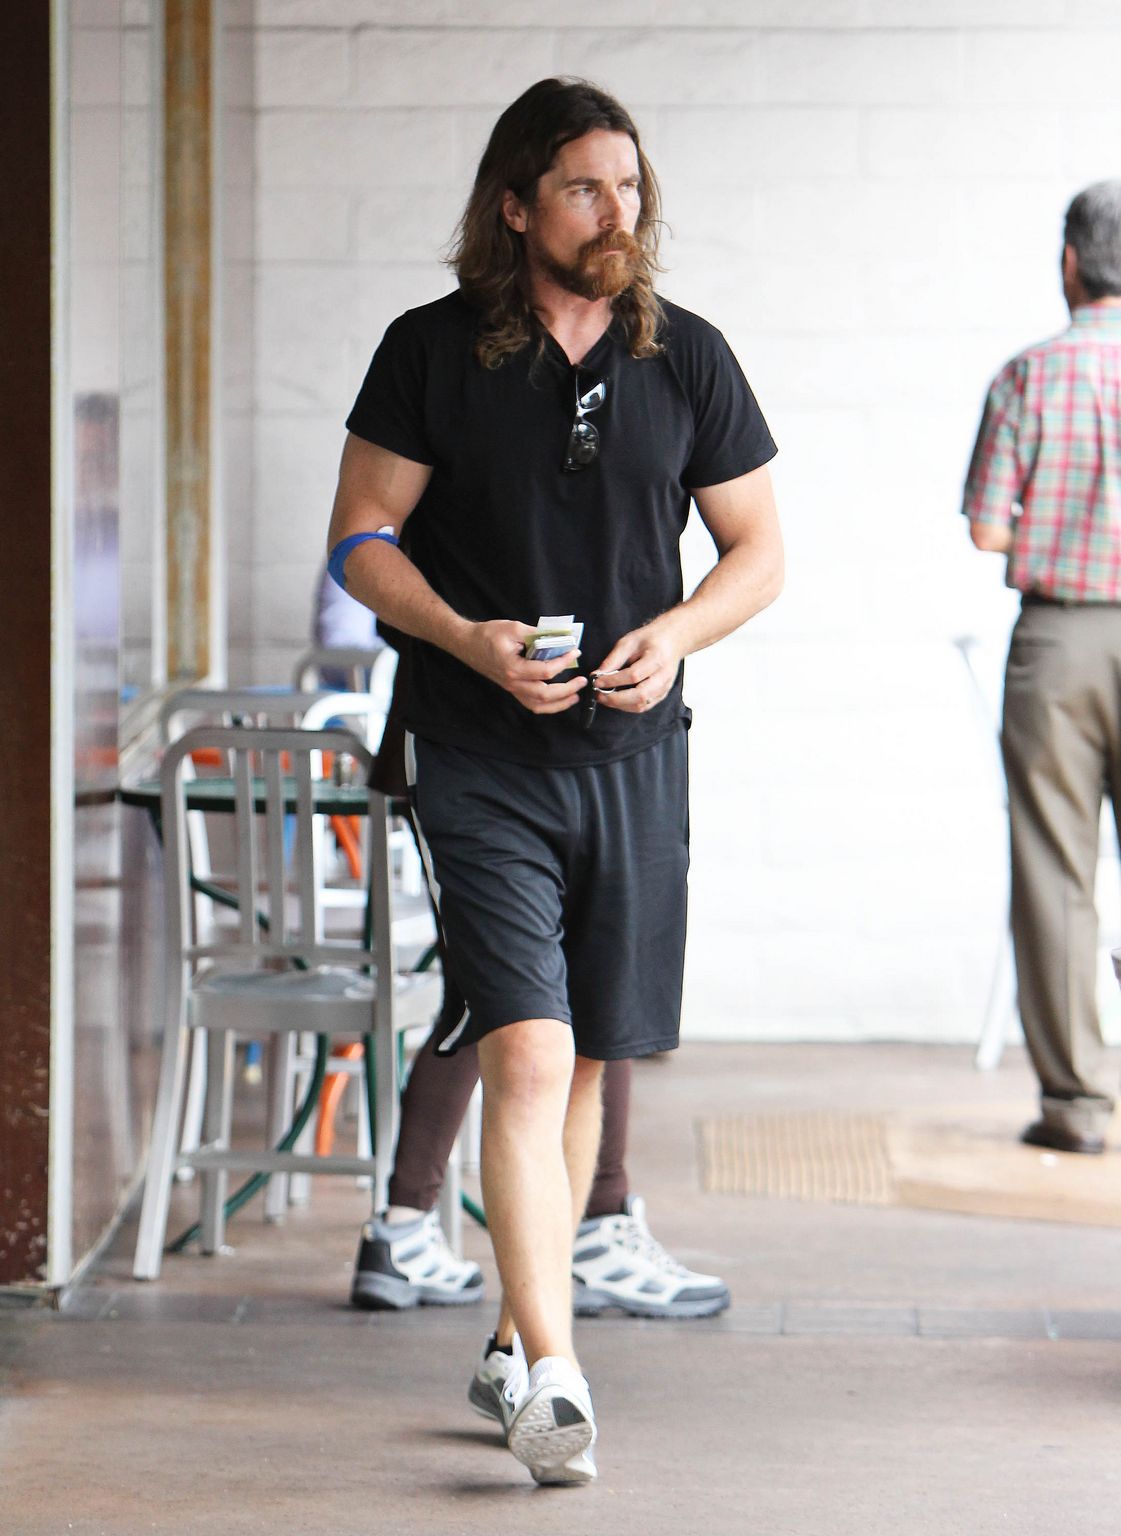 Christian Bale in Santa Monica, Calfiornia